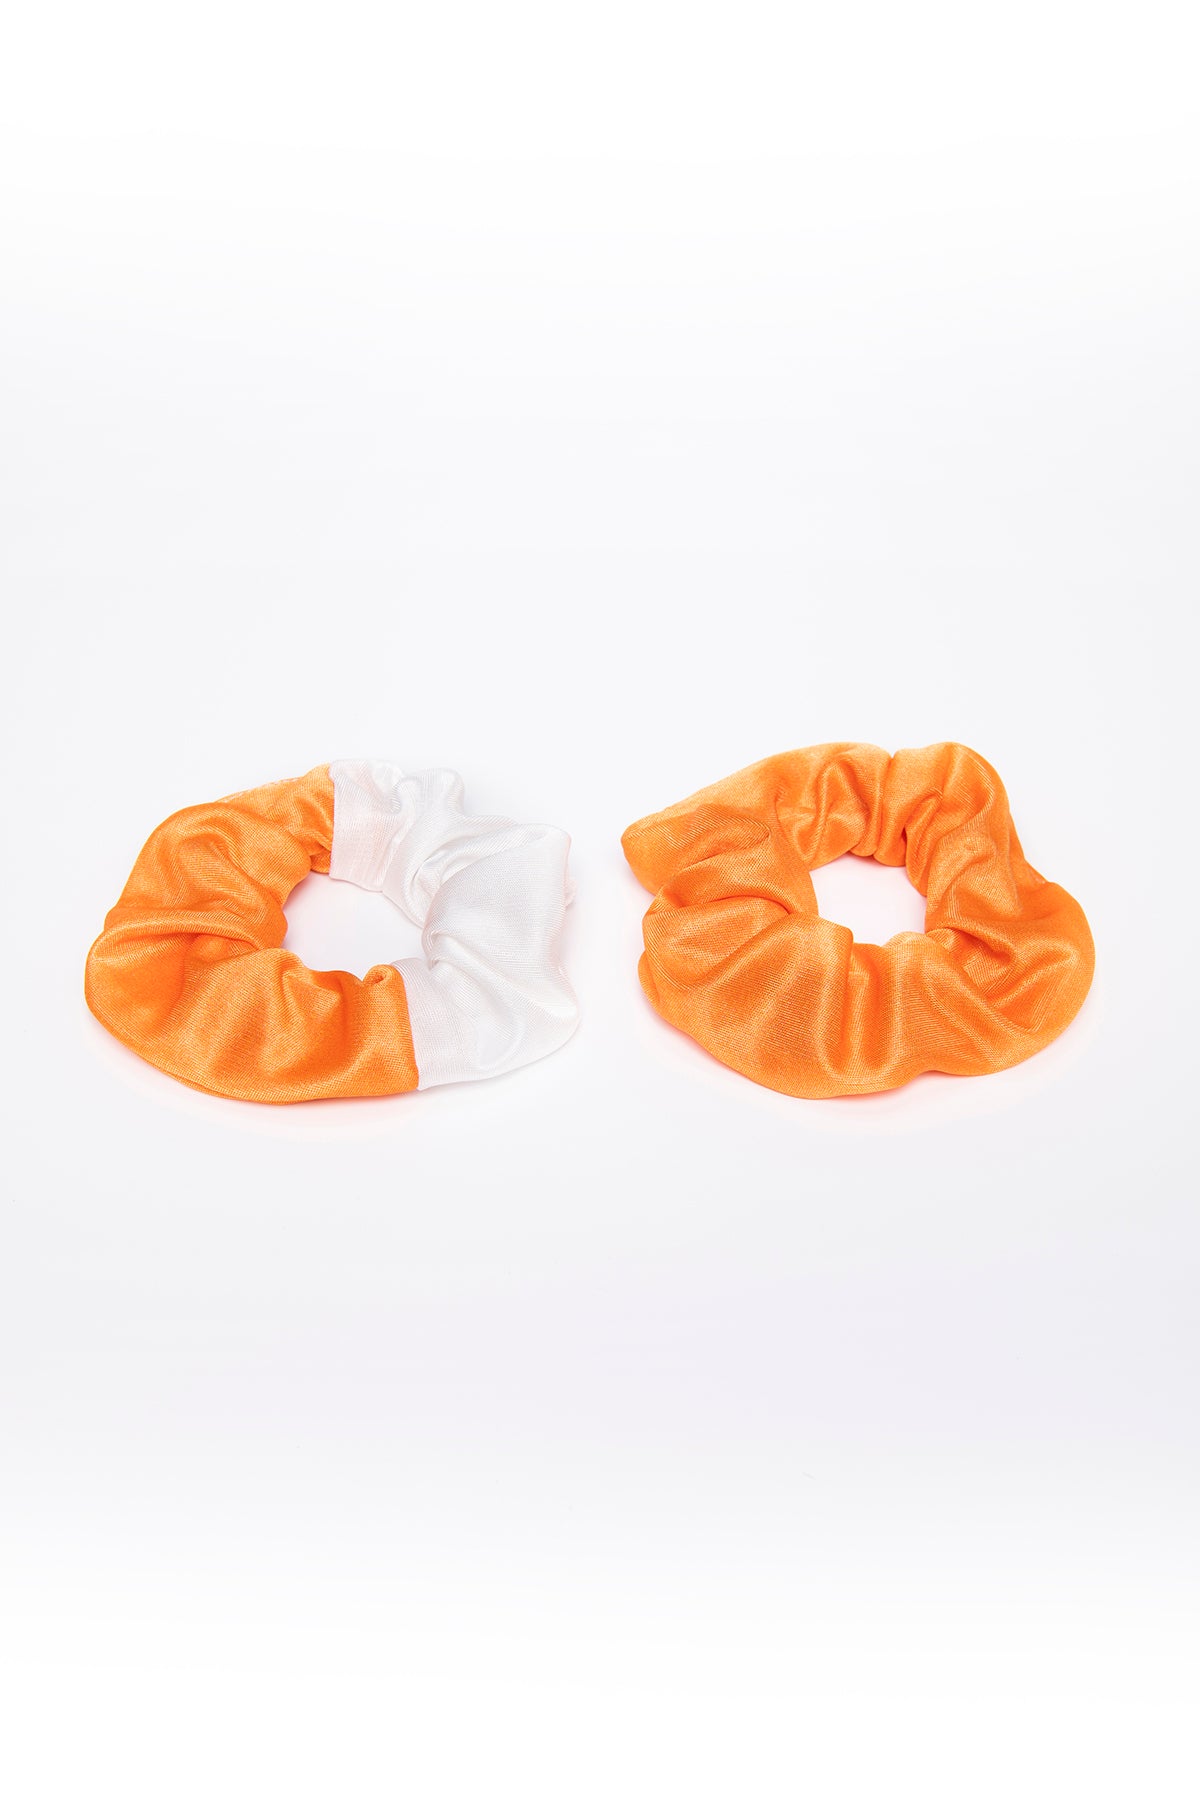 colors-scrunchie-set-half-full-orange-1